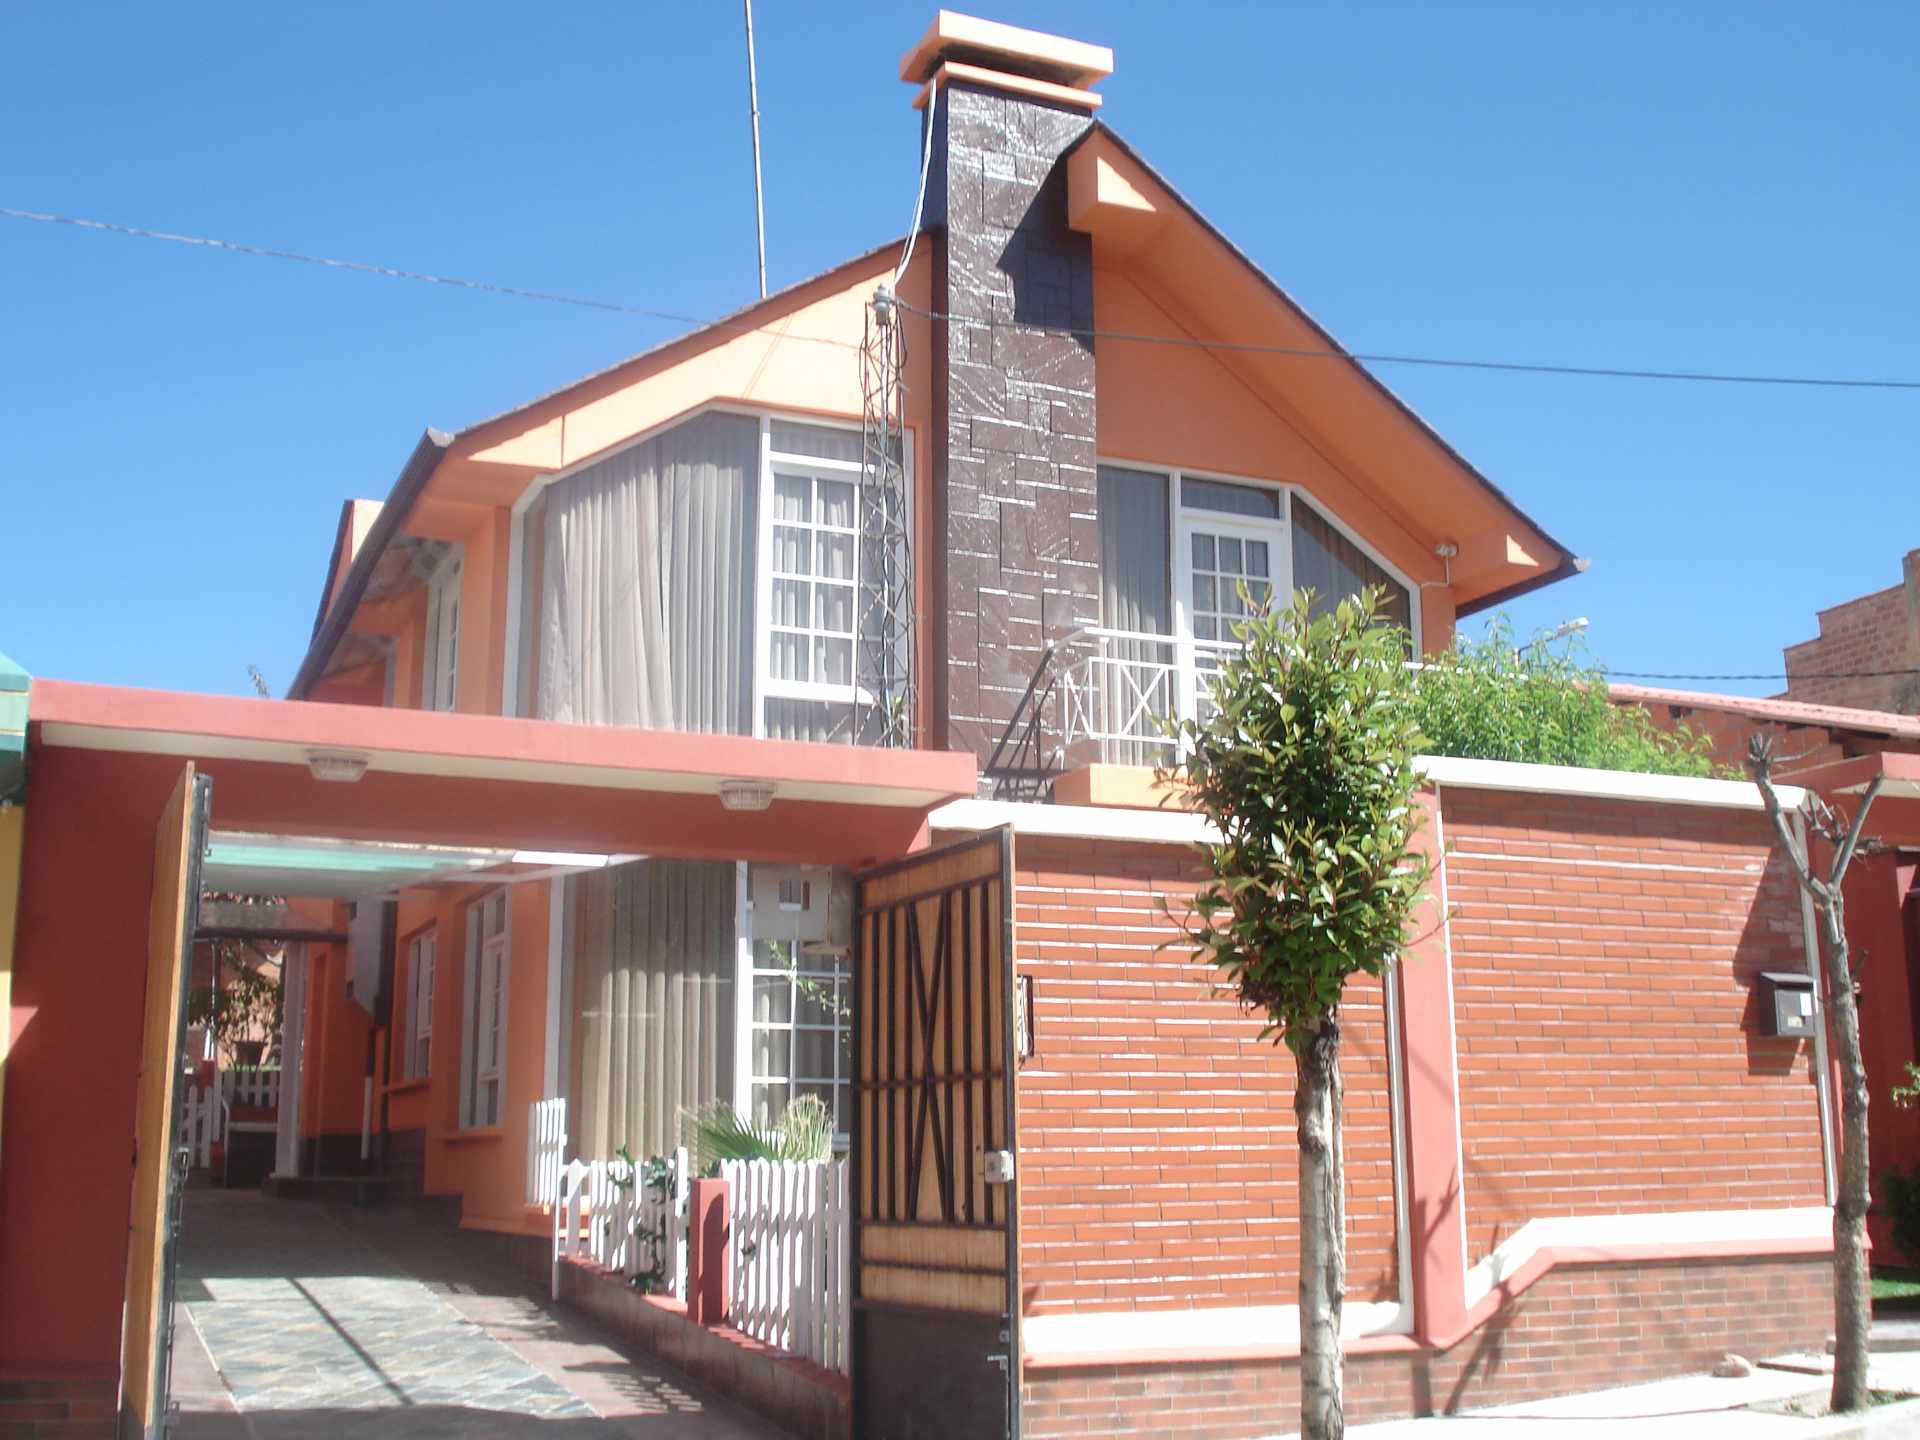 Casa  Villa Carmen Rosa N° 23 final primera meseta, Alto Seguencoma Foto 2